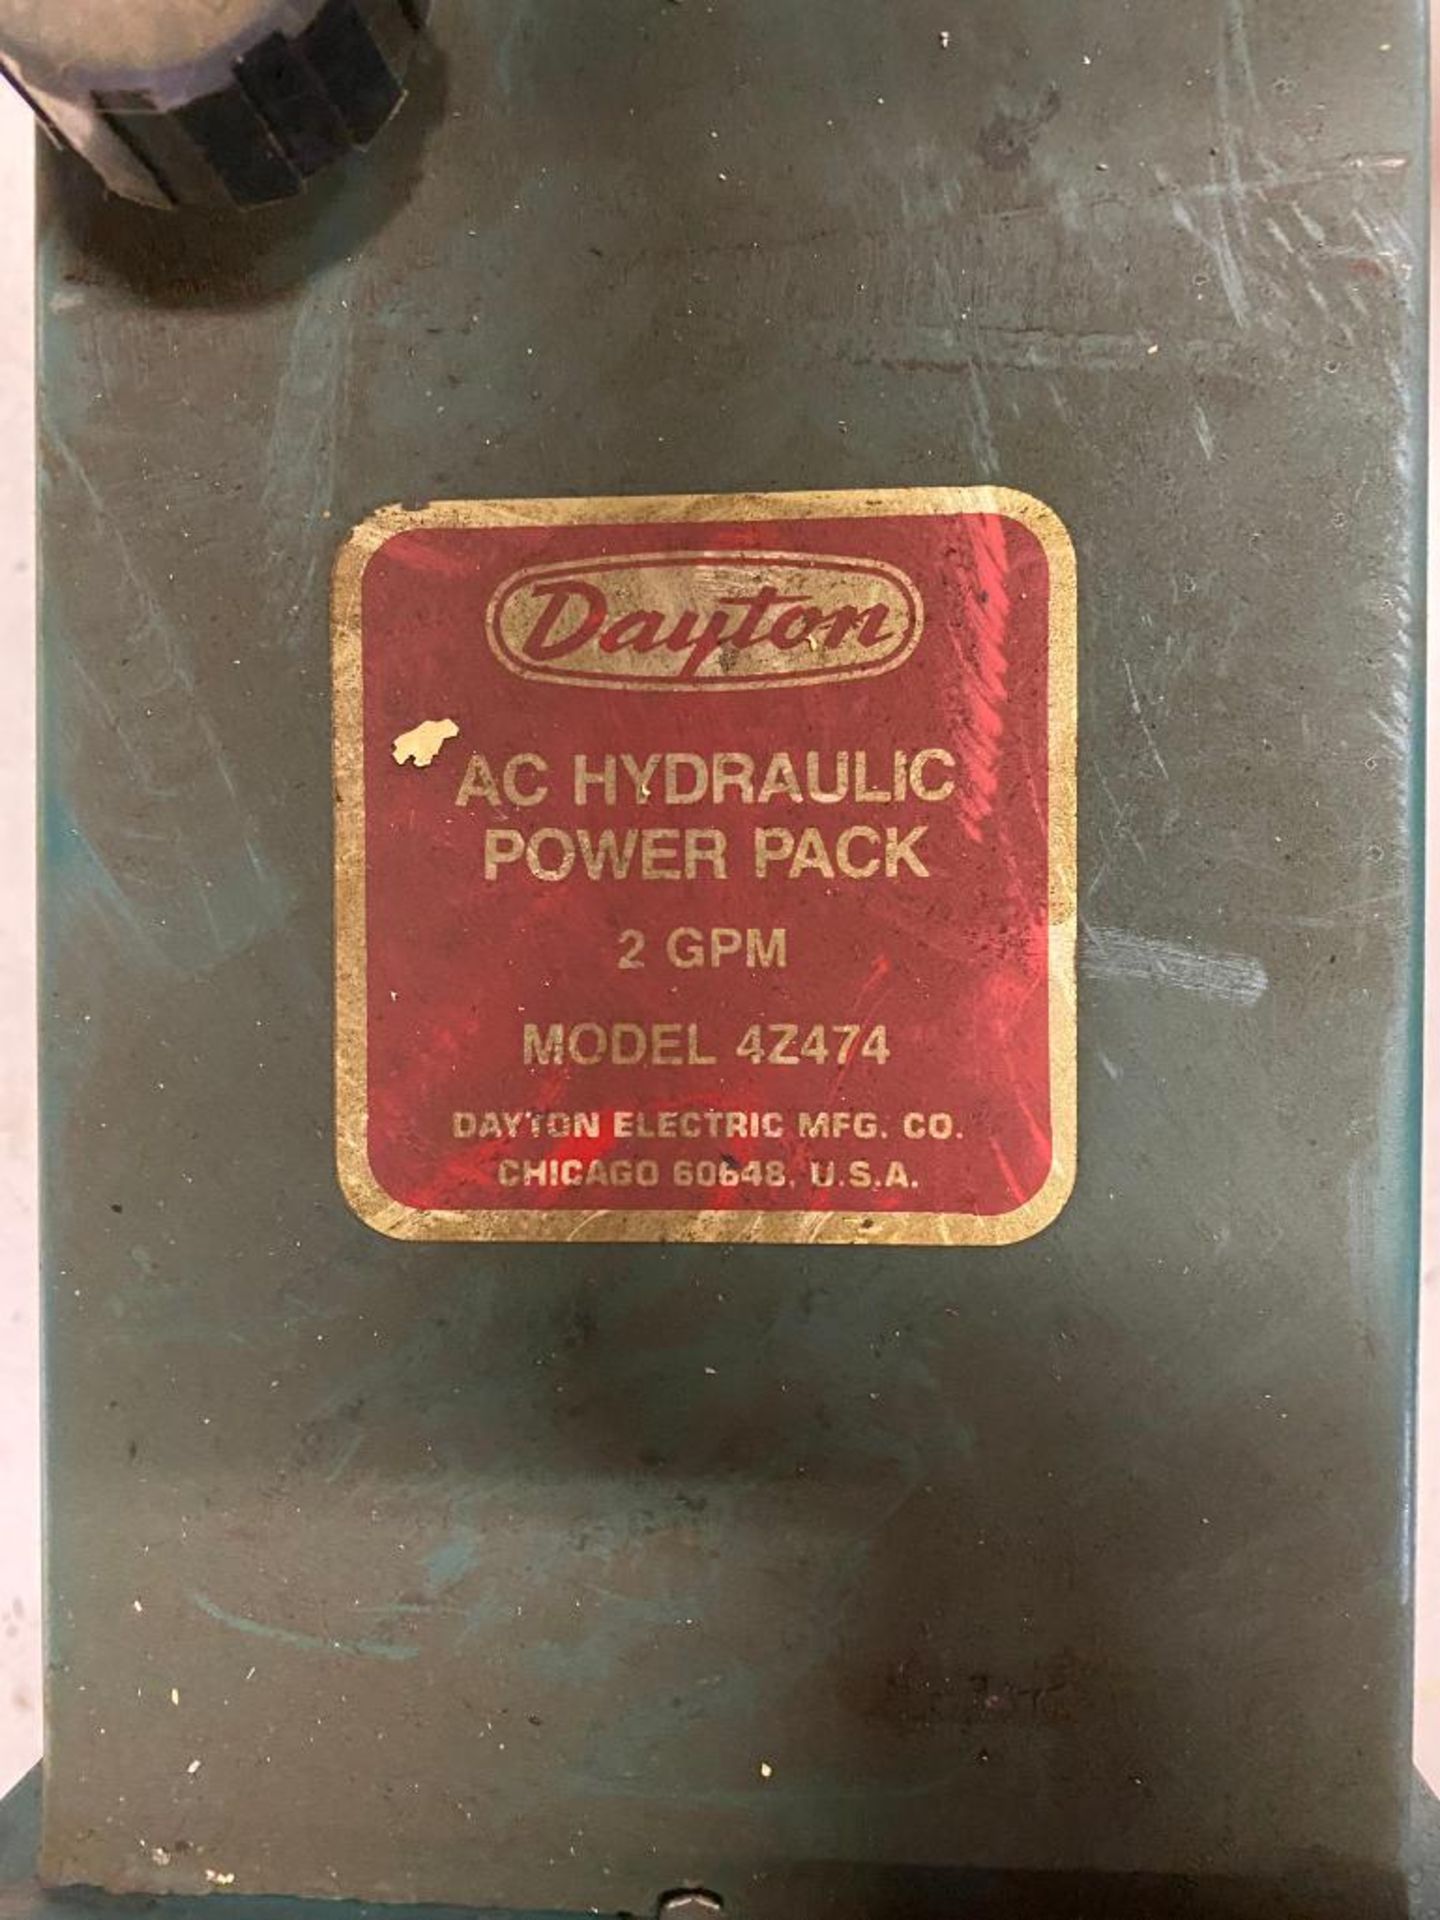 Dayton Model 4Z474 AC Hydraulic Power Pack - Image 2 of 3